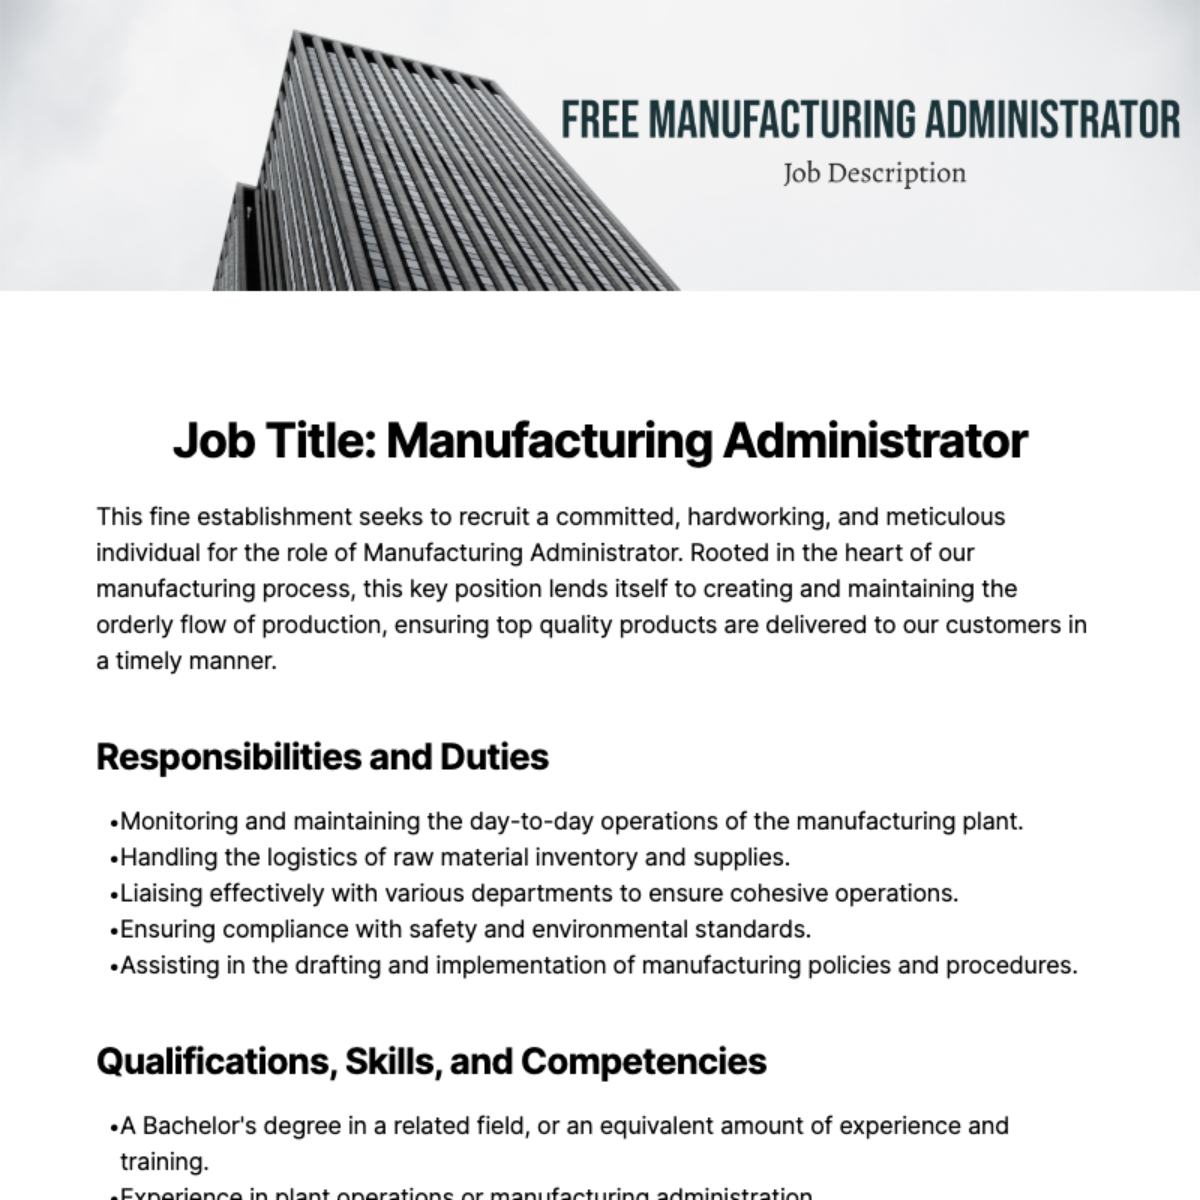 Free Manufacturing Administrator Job Description Template